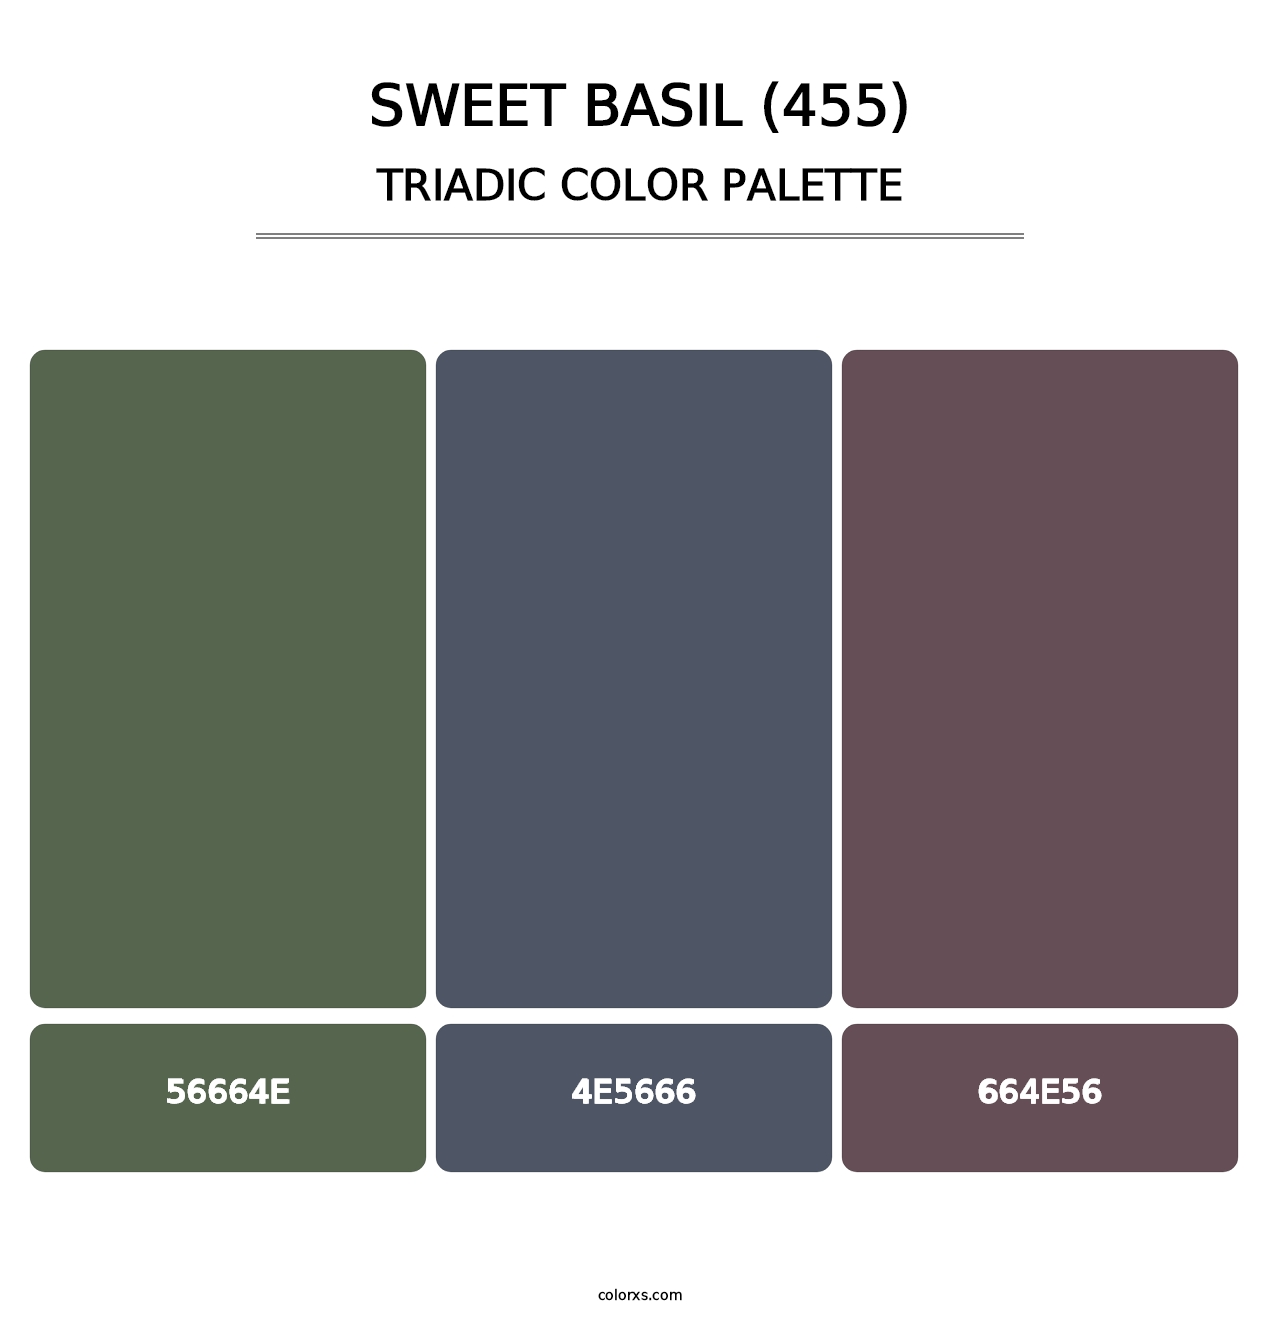 Sweet Basil (455) - Triadic Color Palette